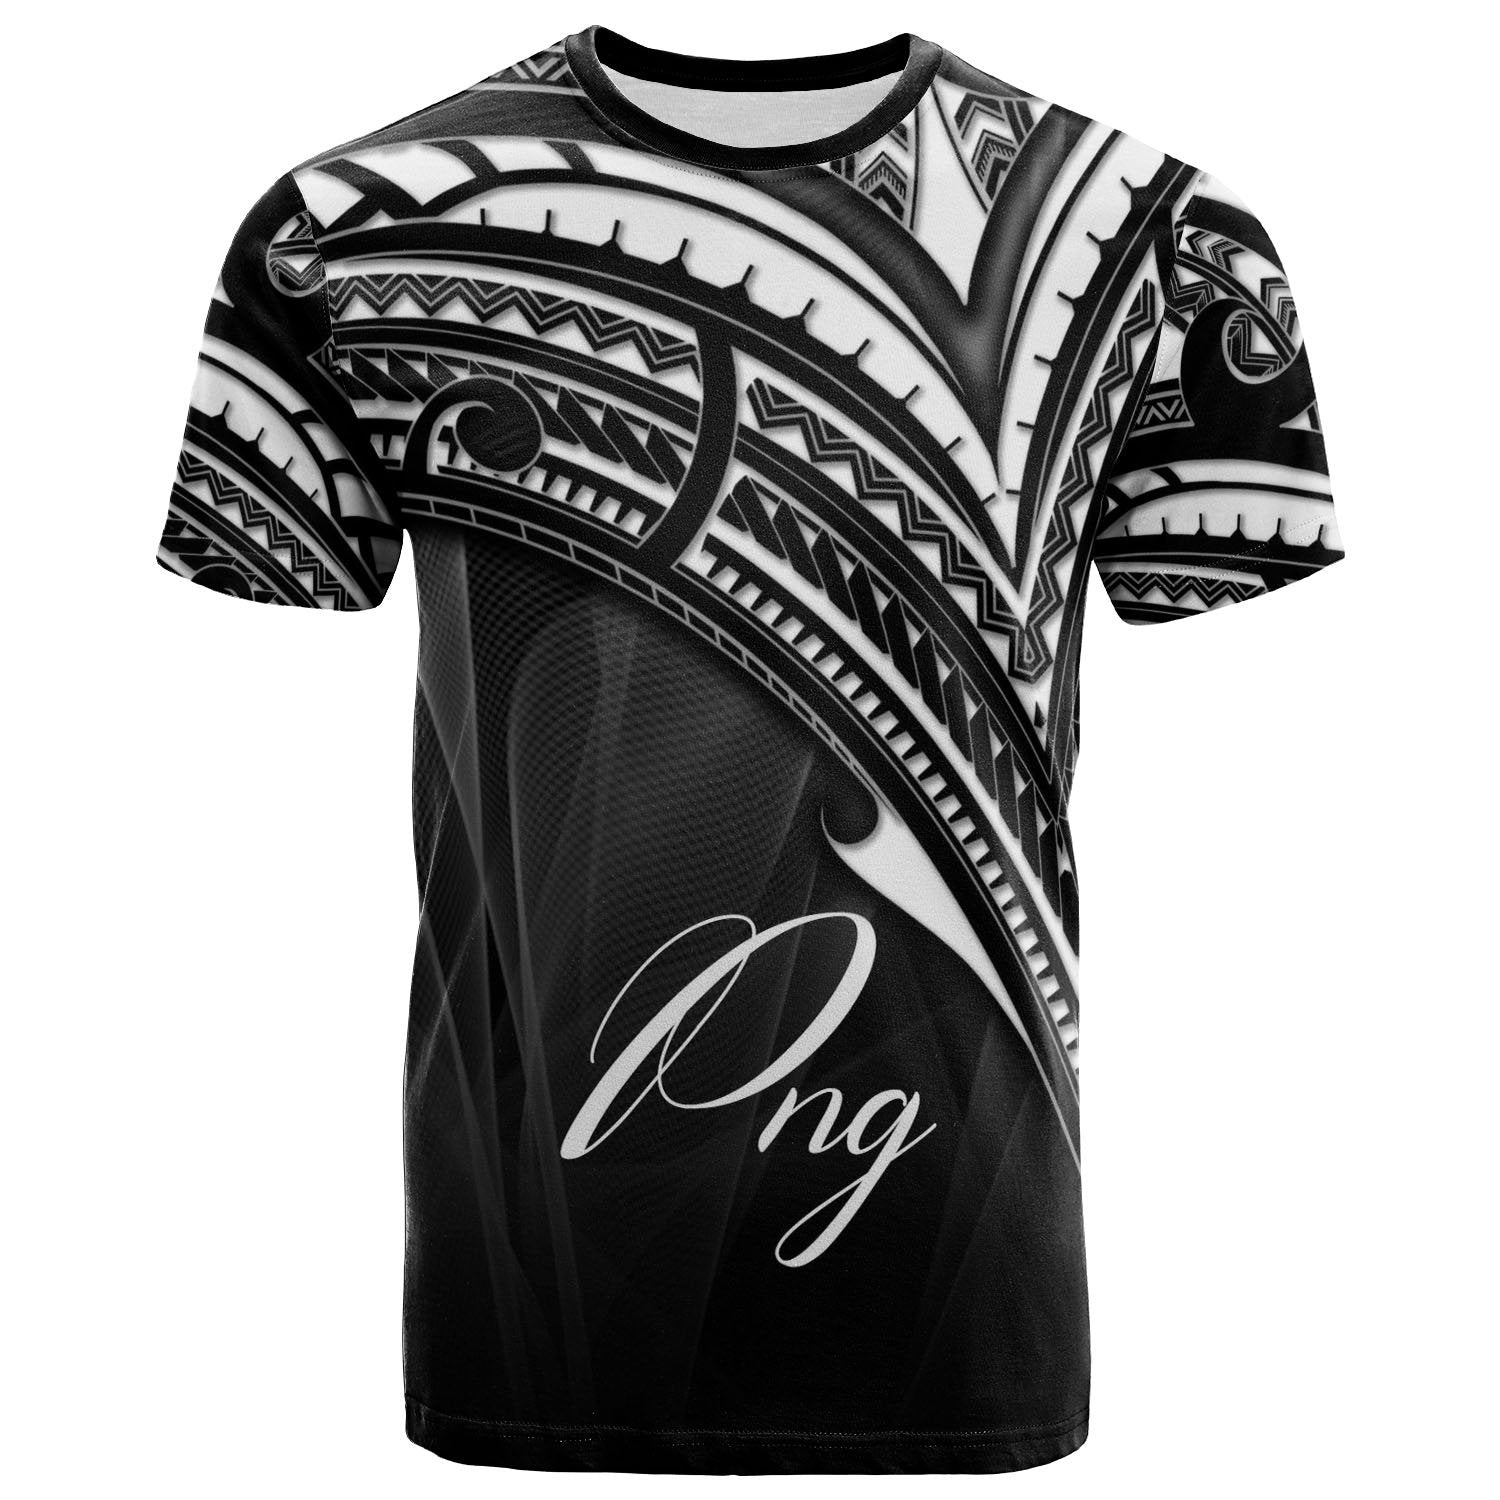 Papua New Guinea T Shirt Cross Style Unisex Black - Polynesian Pride